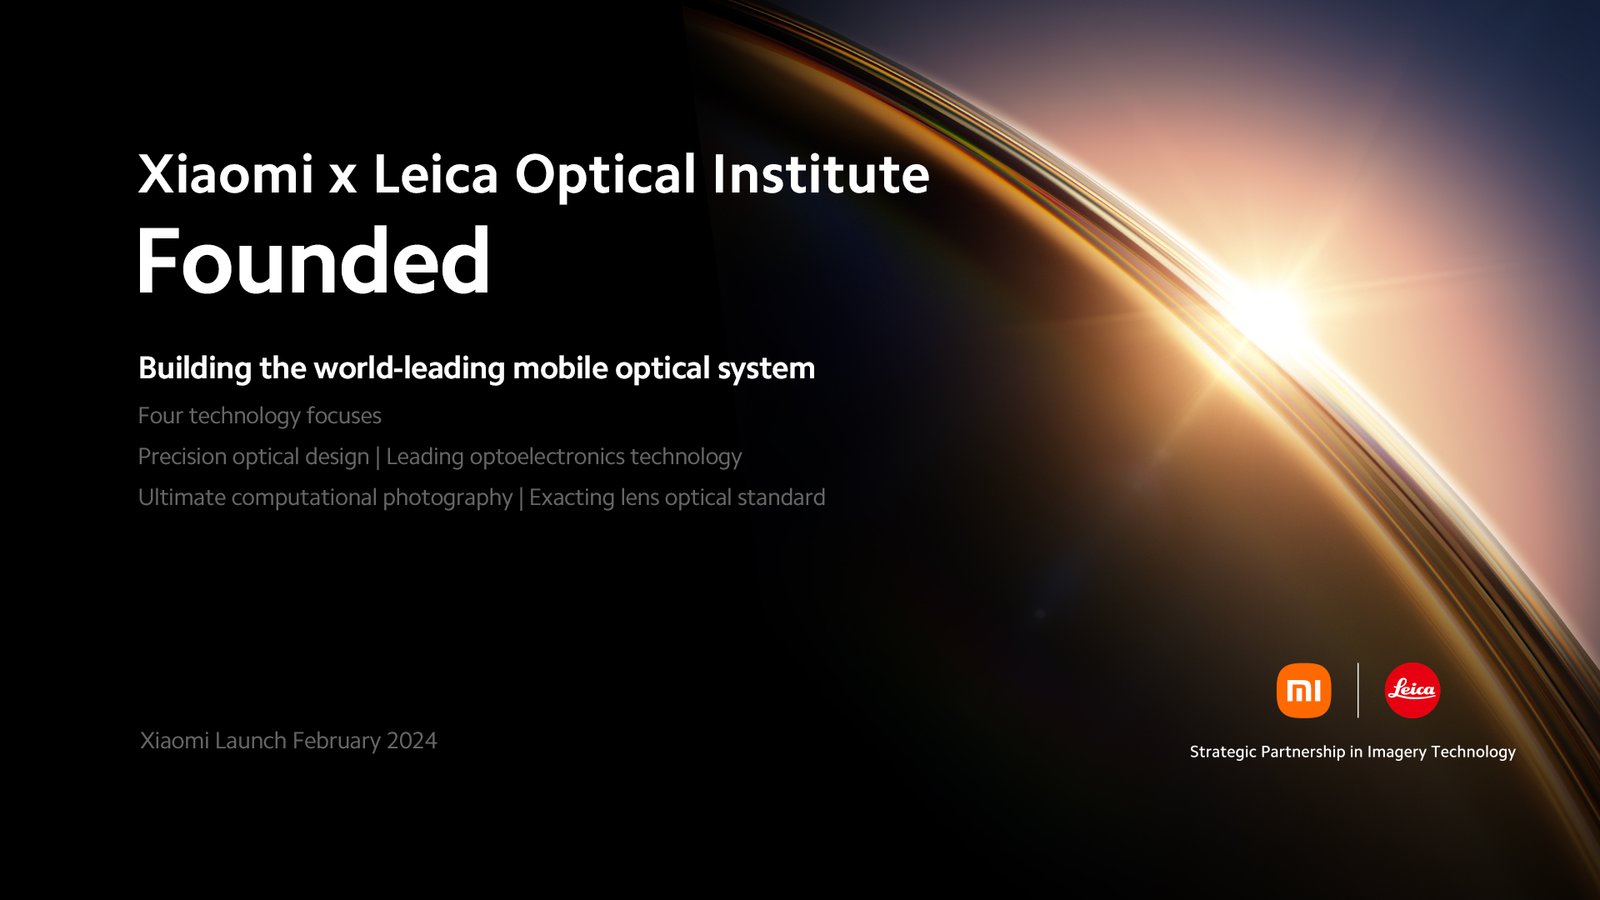 Xiaomi and Leica Unveil Xiaomi x Leica Optical Institute Pioneering Advancements in Mobile Imaging